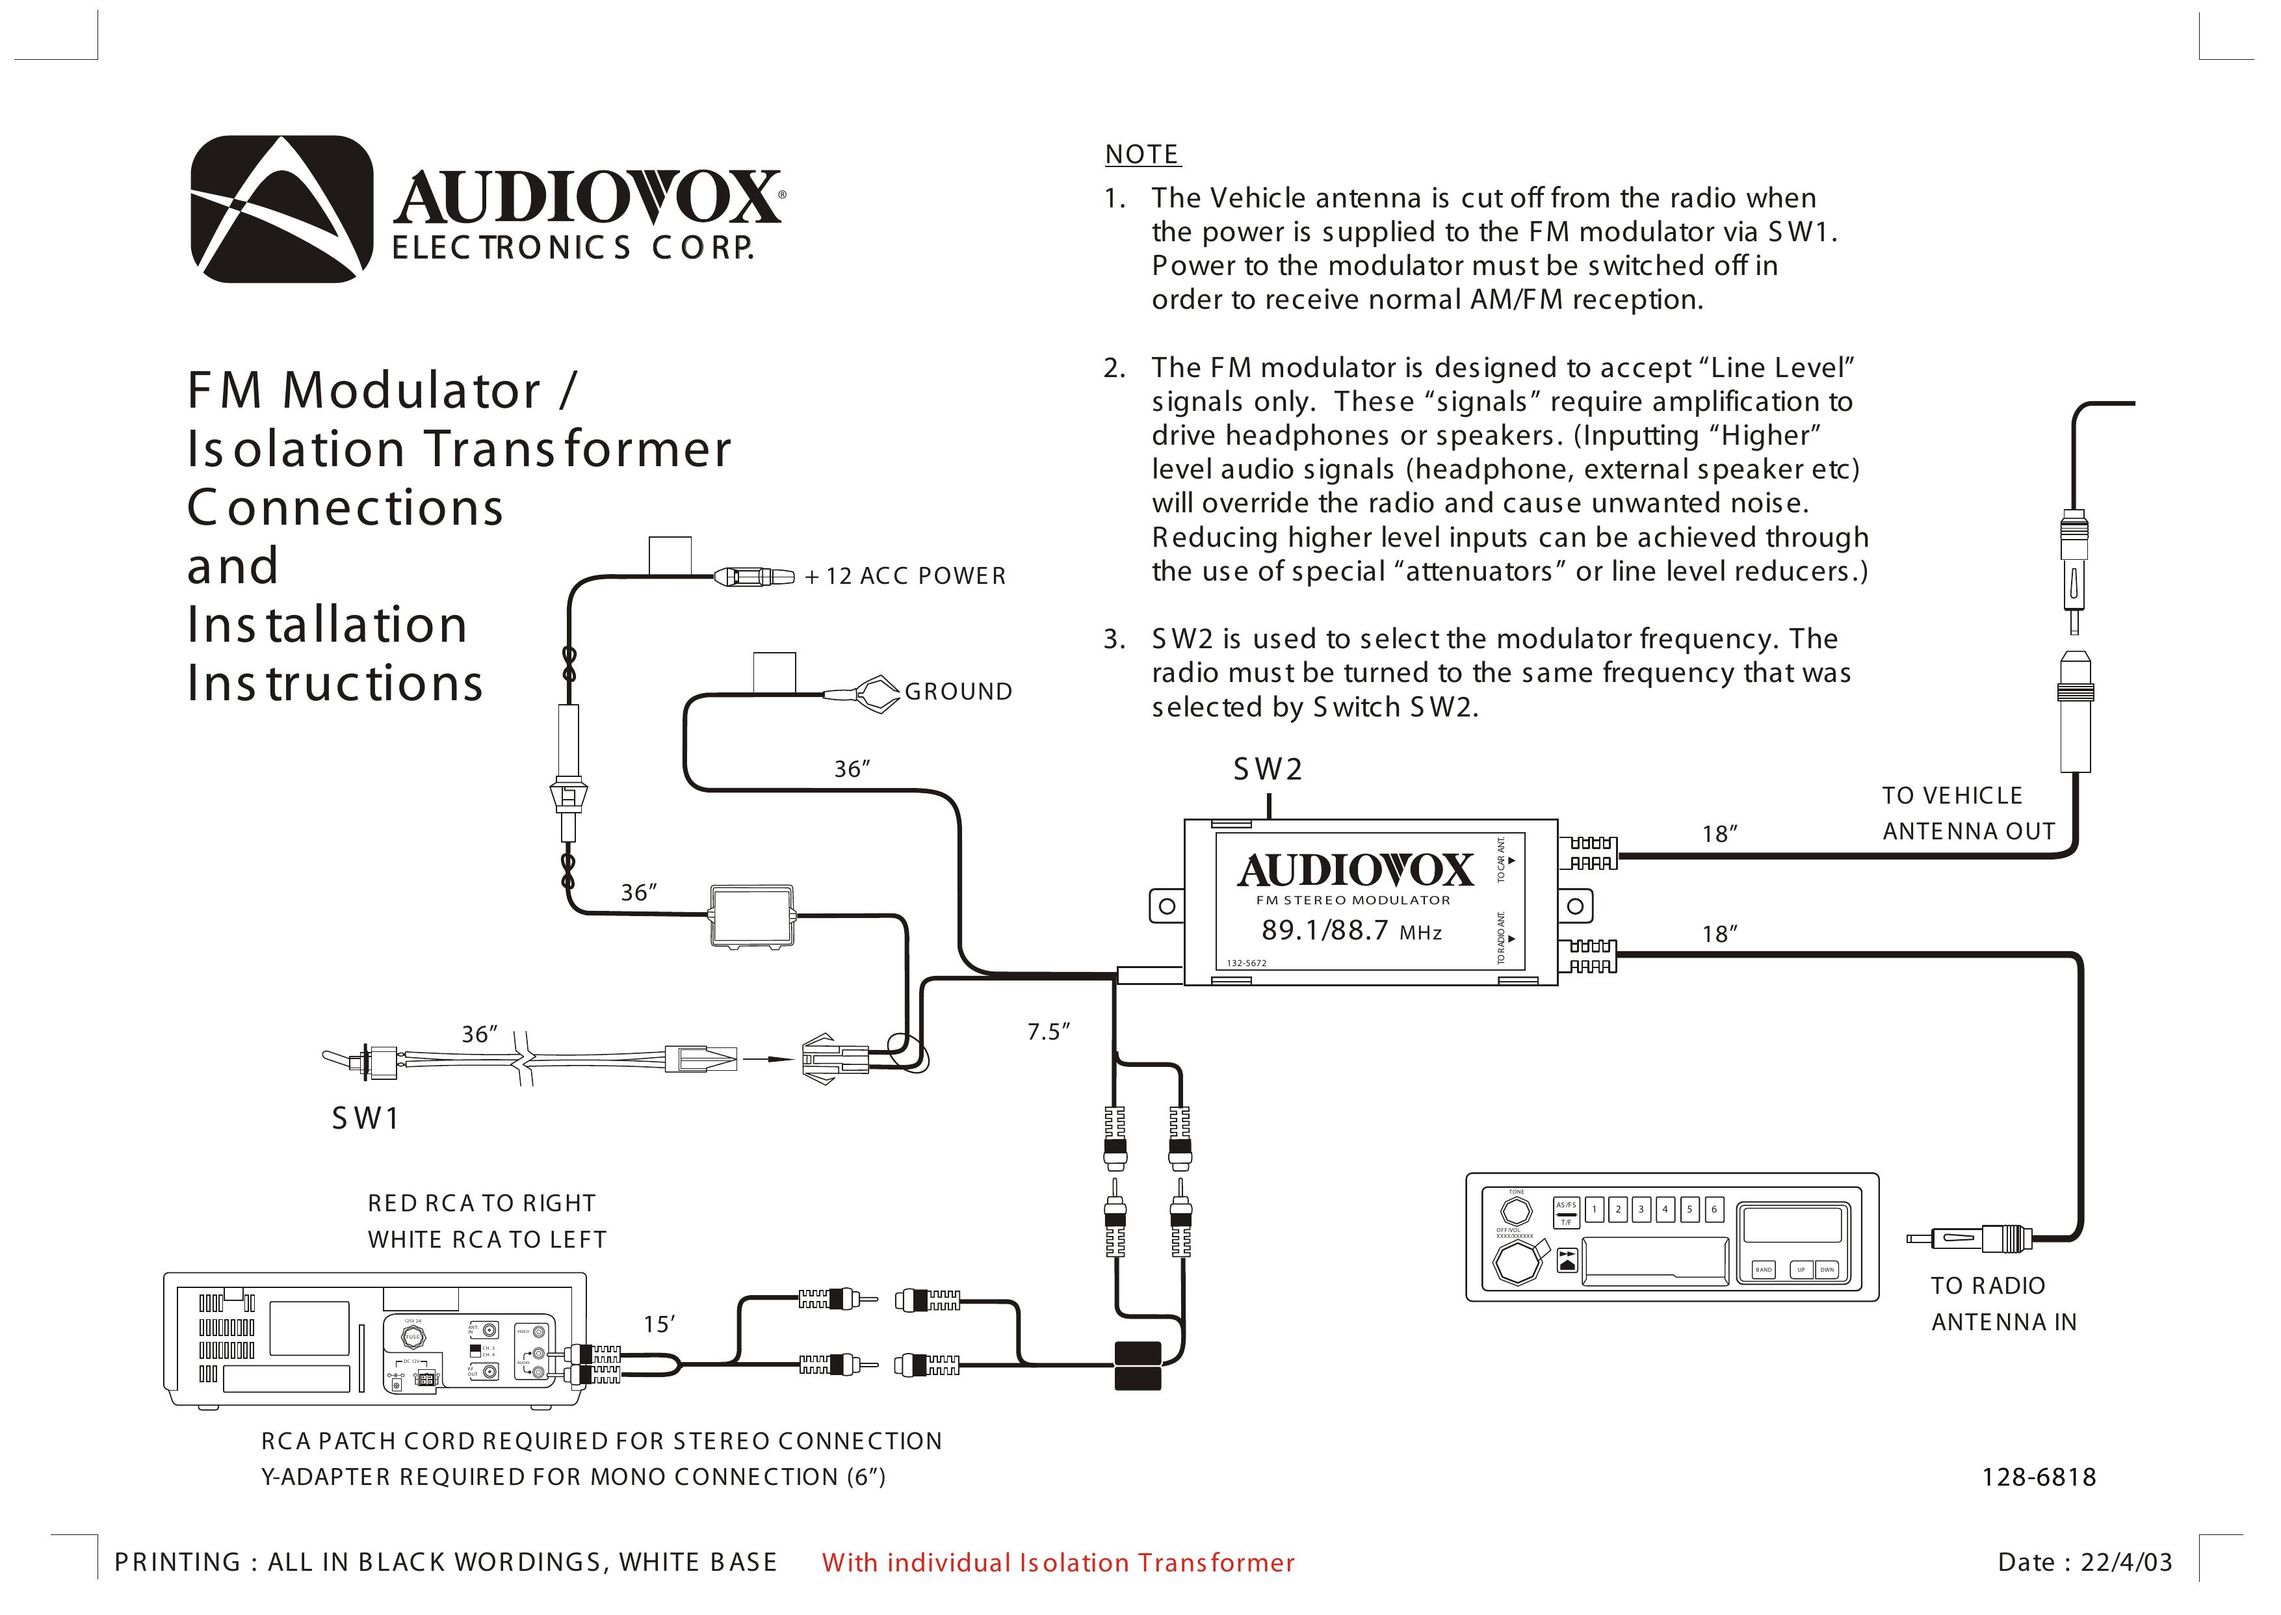 Audiovox 128-6818 Satellite Radio User Manual